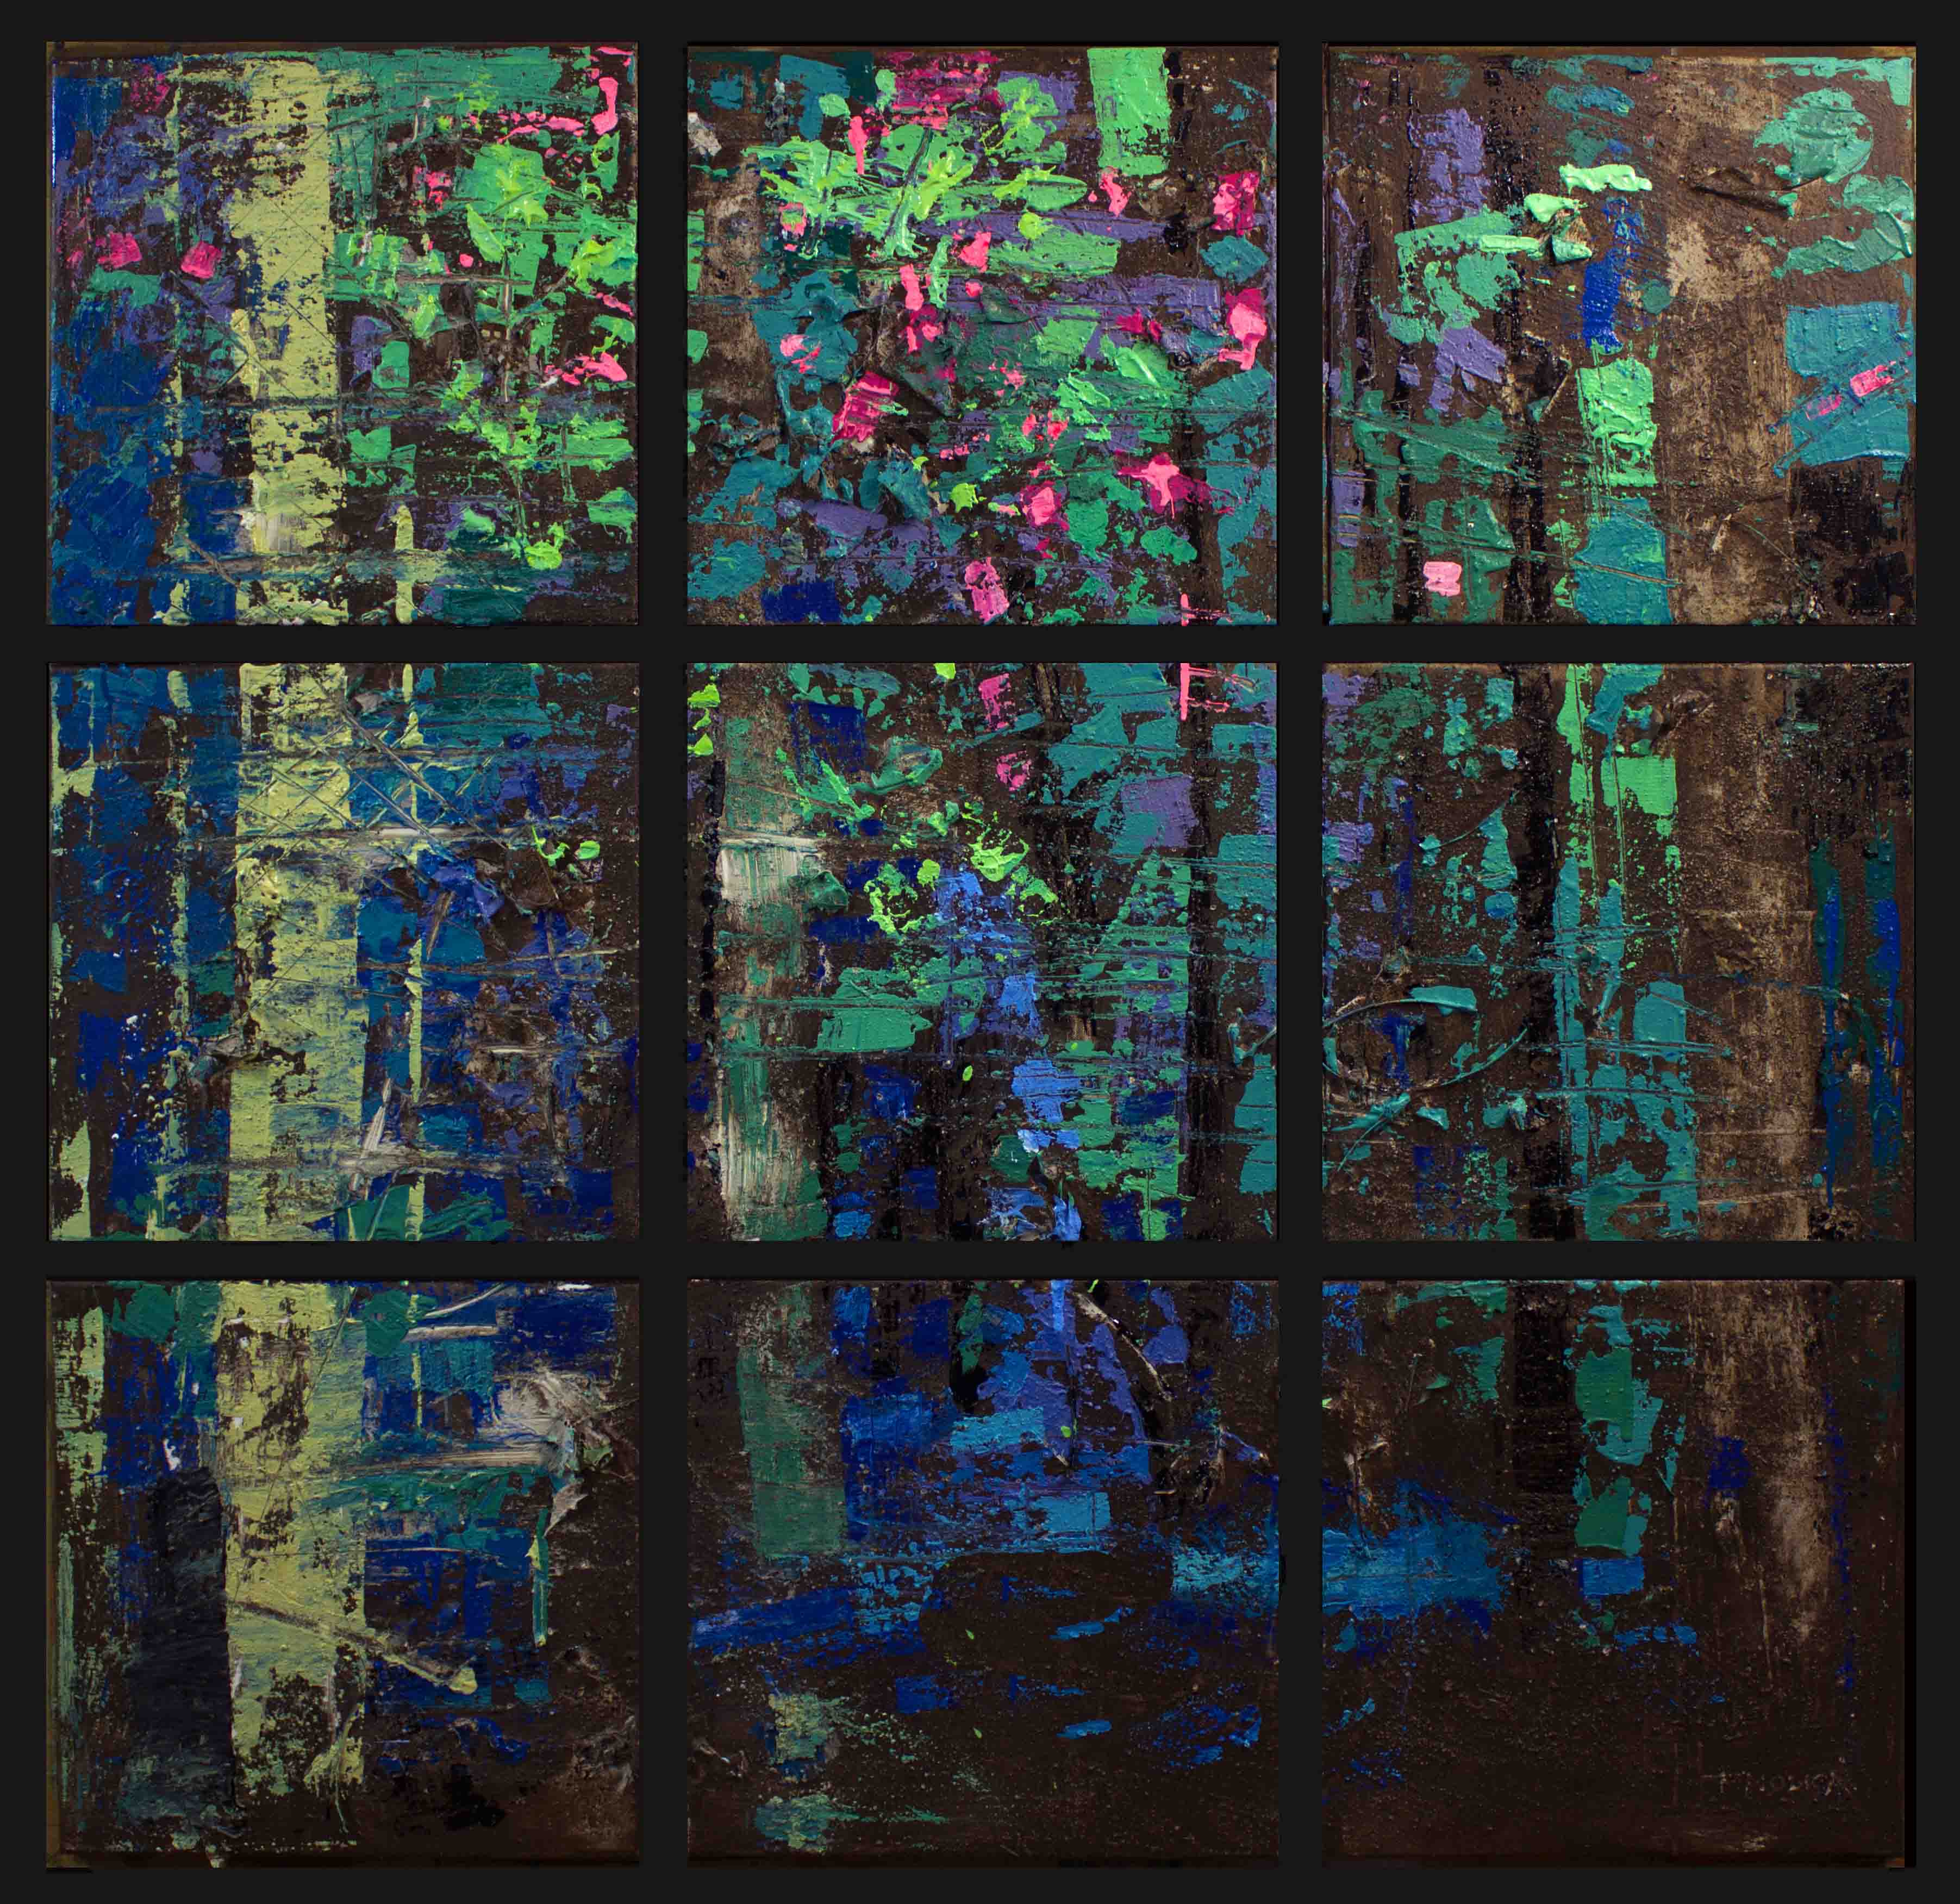 Fabio Modica | Nature V - mixed media on canvas (12 panels) - cm 130x130 - 51x51 inches - 2015